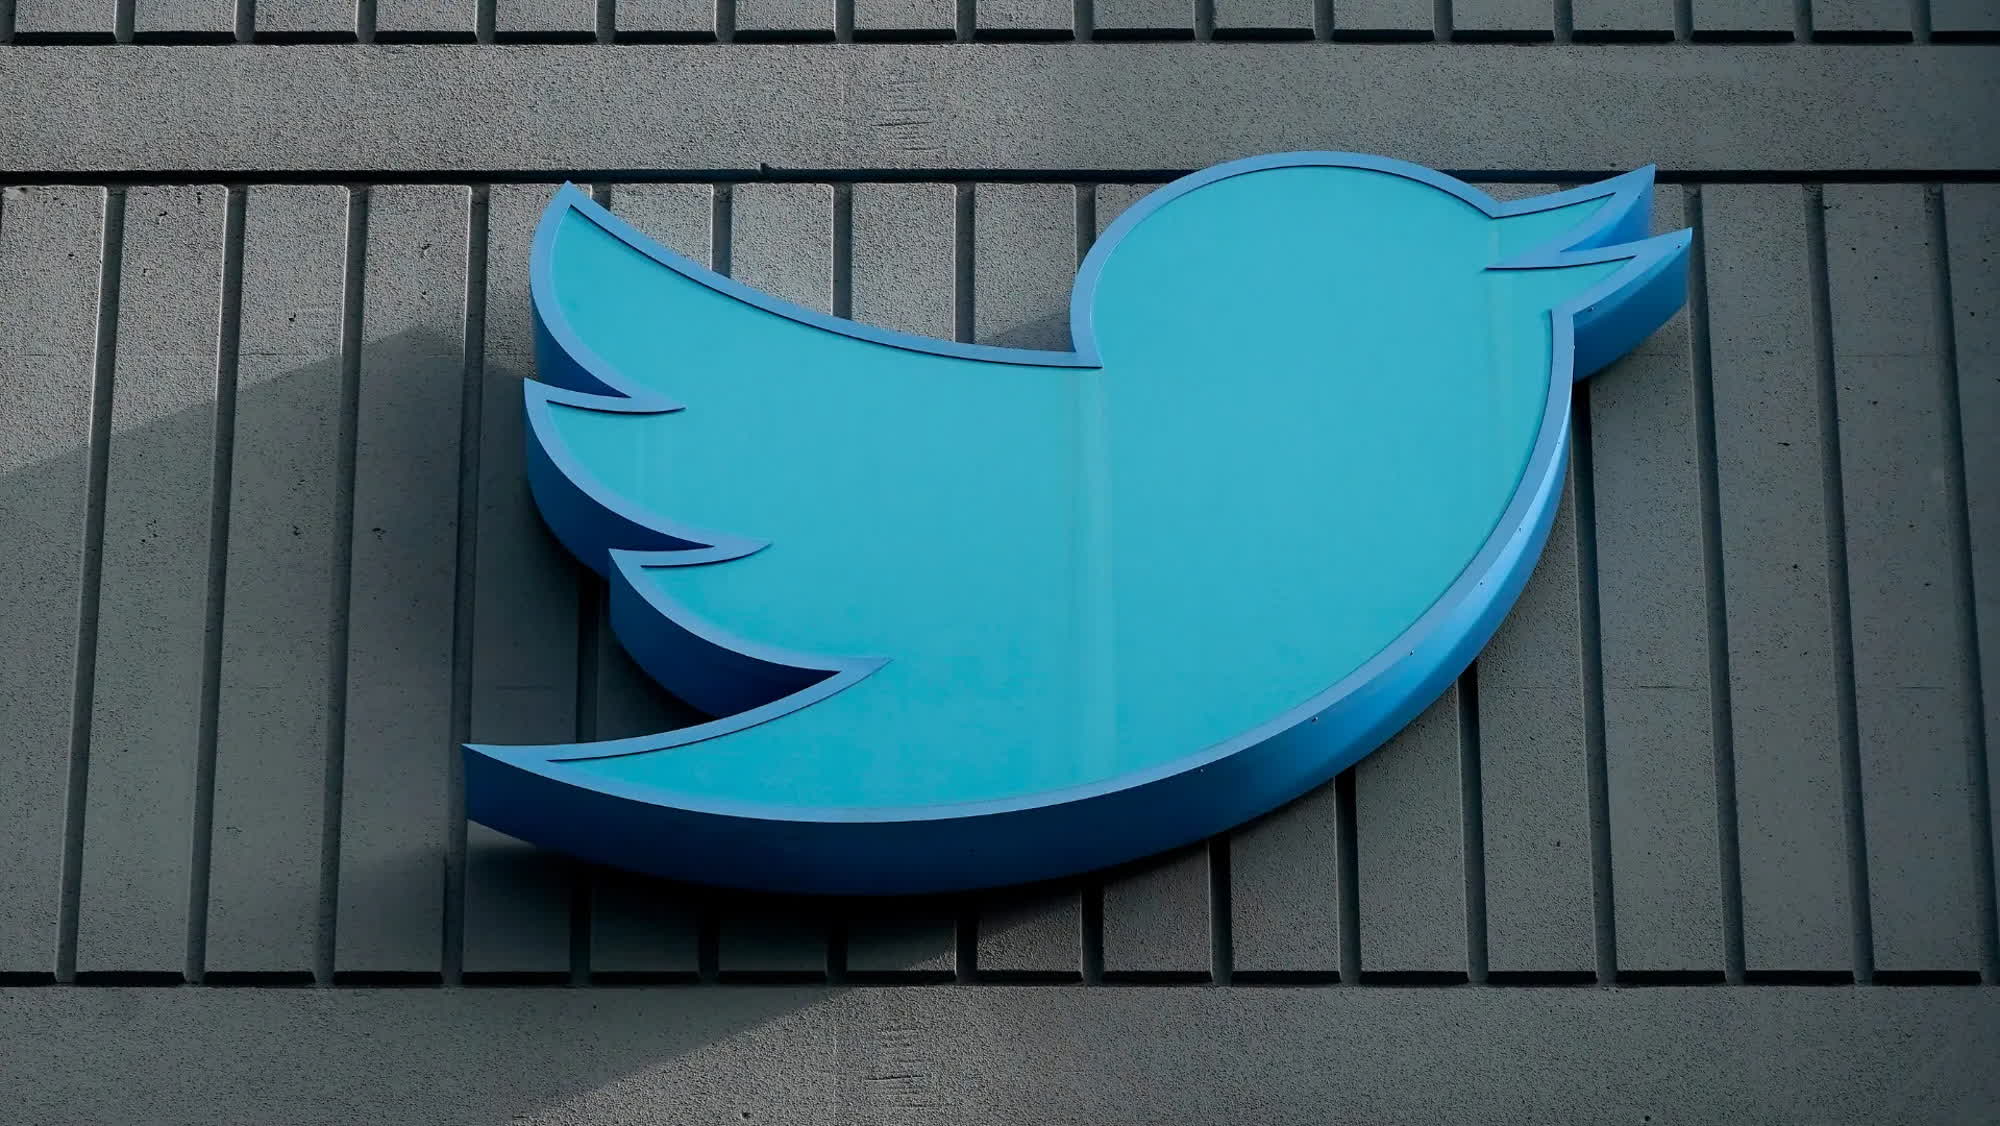 Goodbye to the blue bird: Elon Musk announces new logo for Twitter